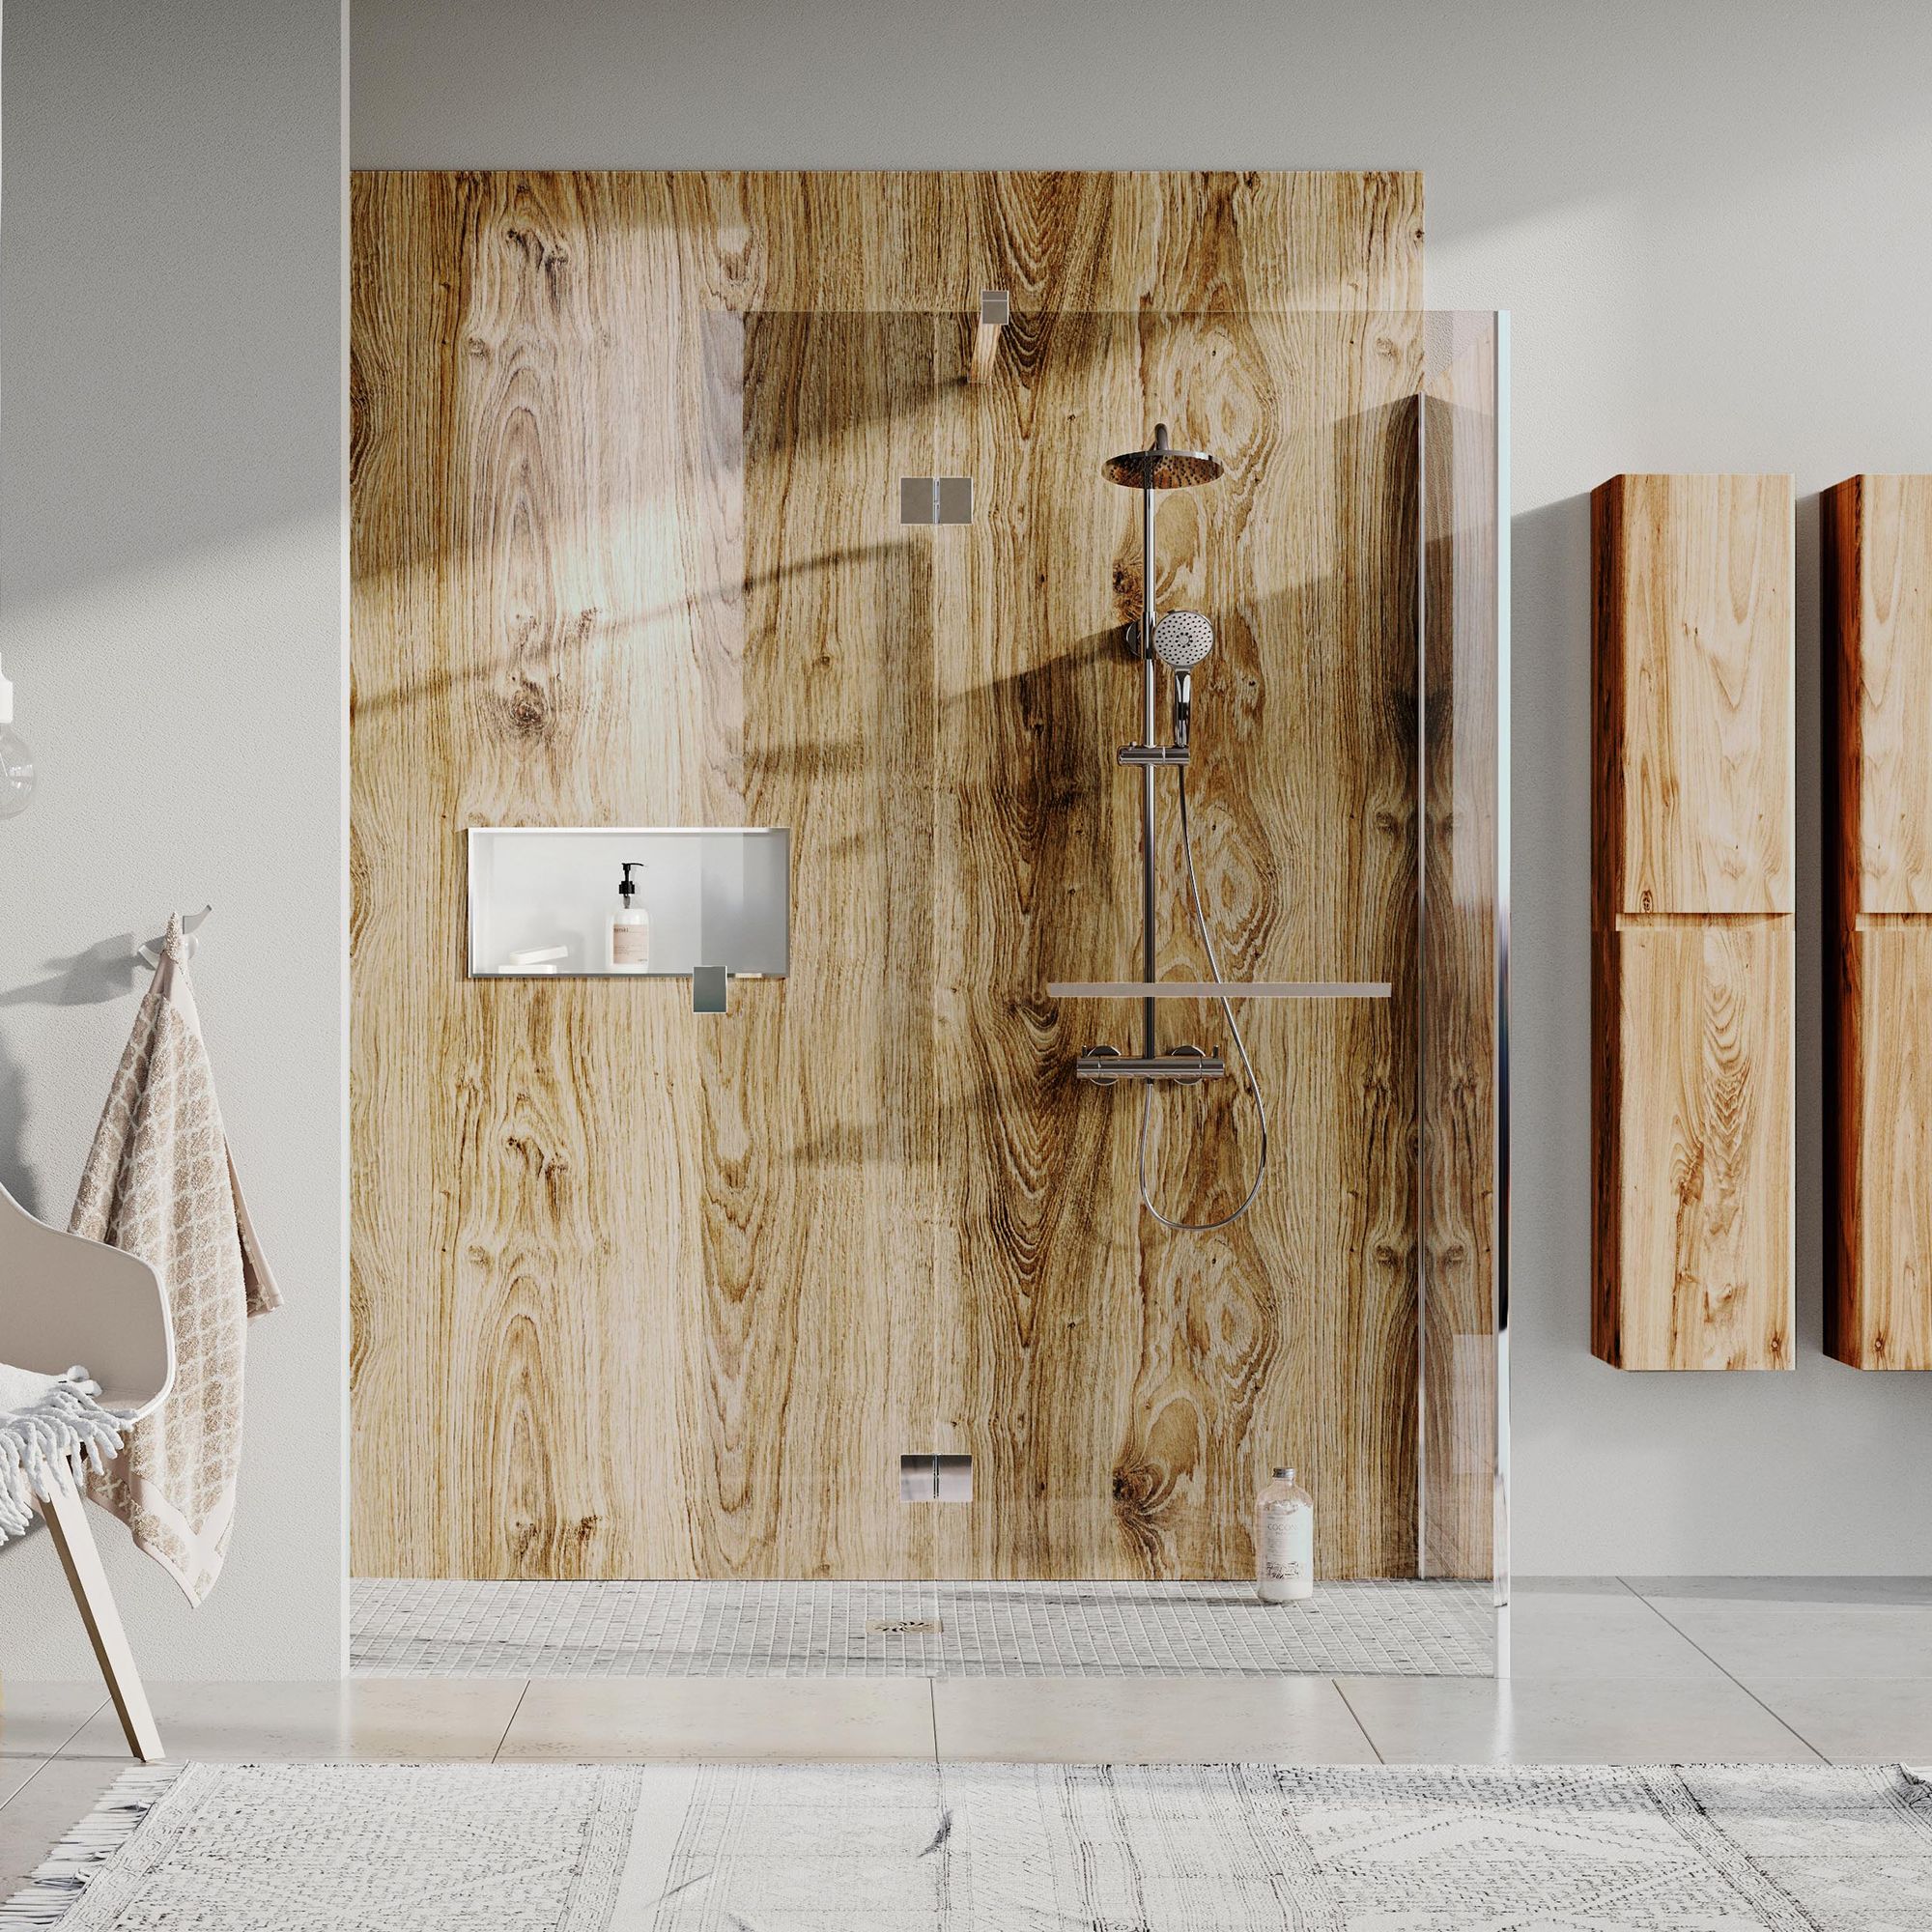 Aquadry Rustic oak effect 1 sided Shower Wall panel kit (L)2400mm (W)1000mm (T)10mm